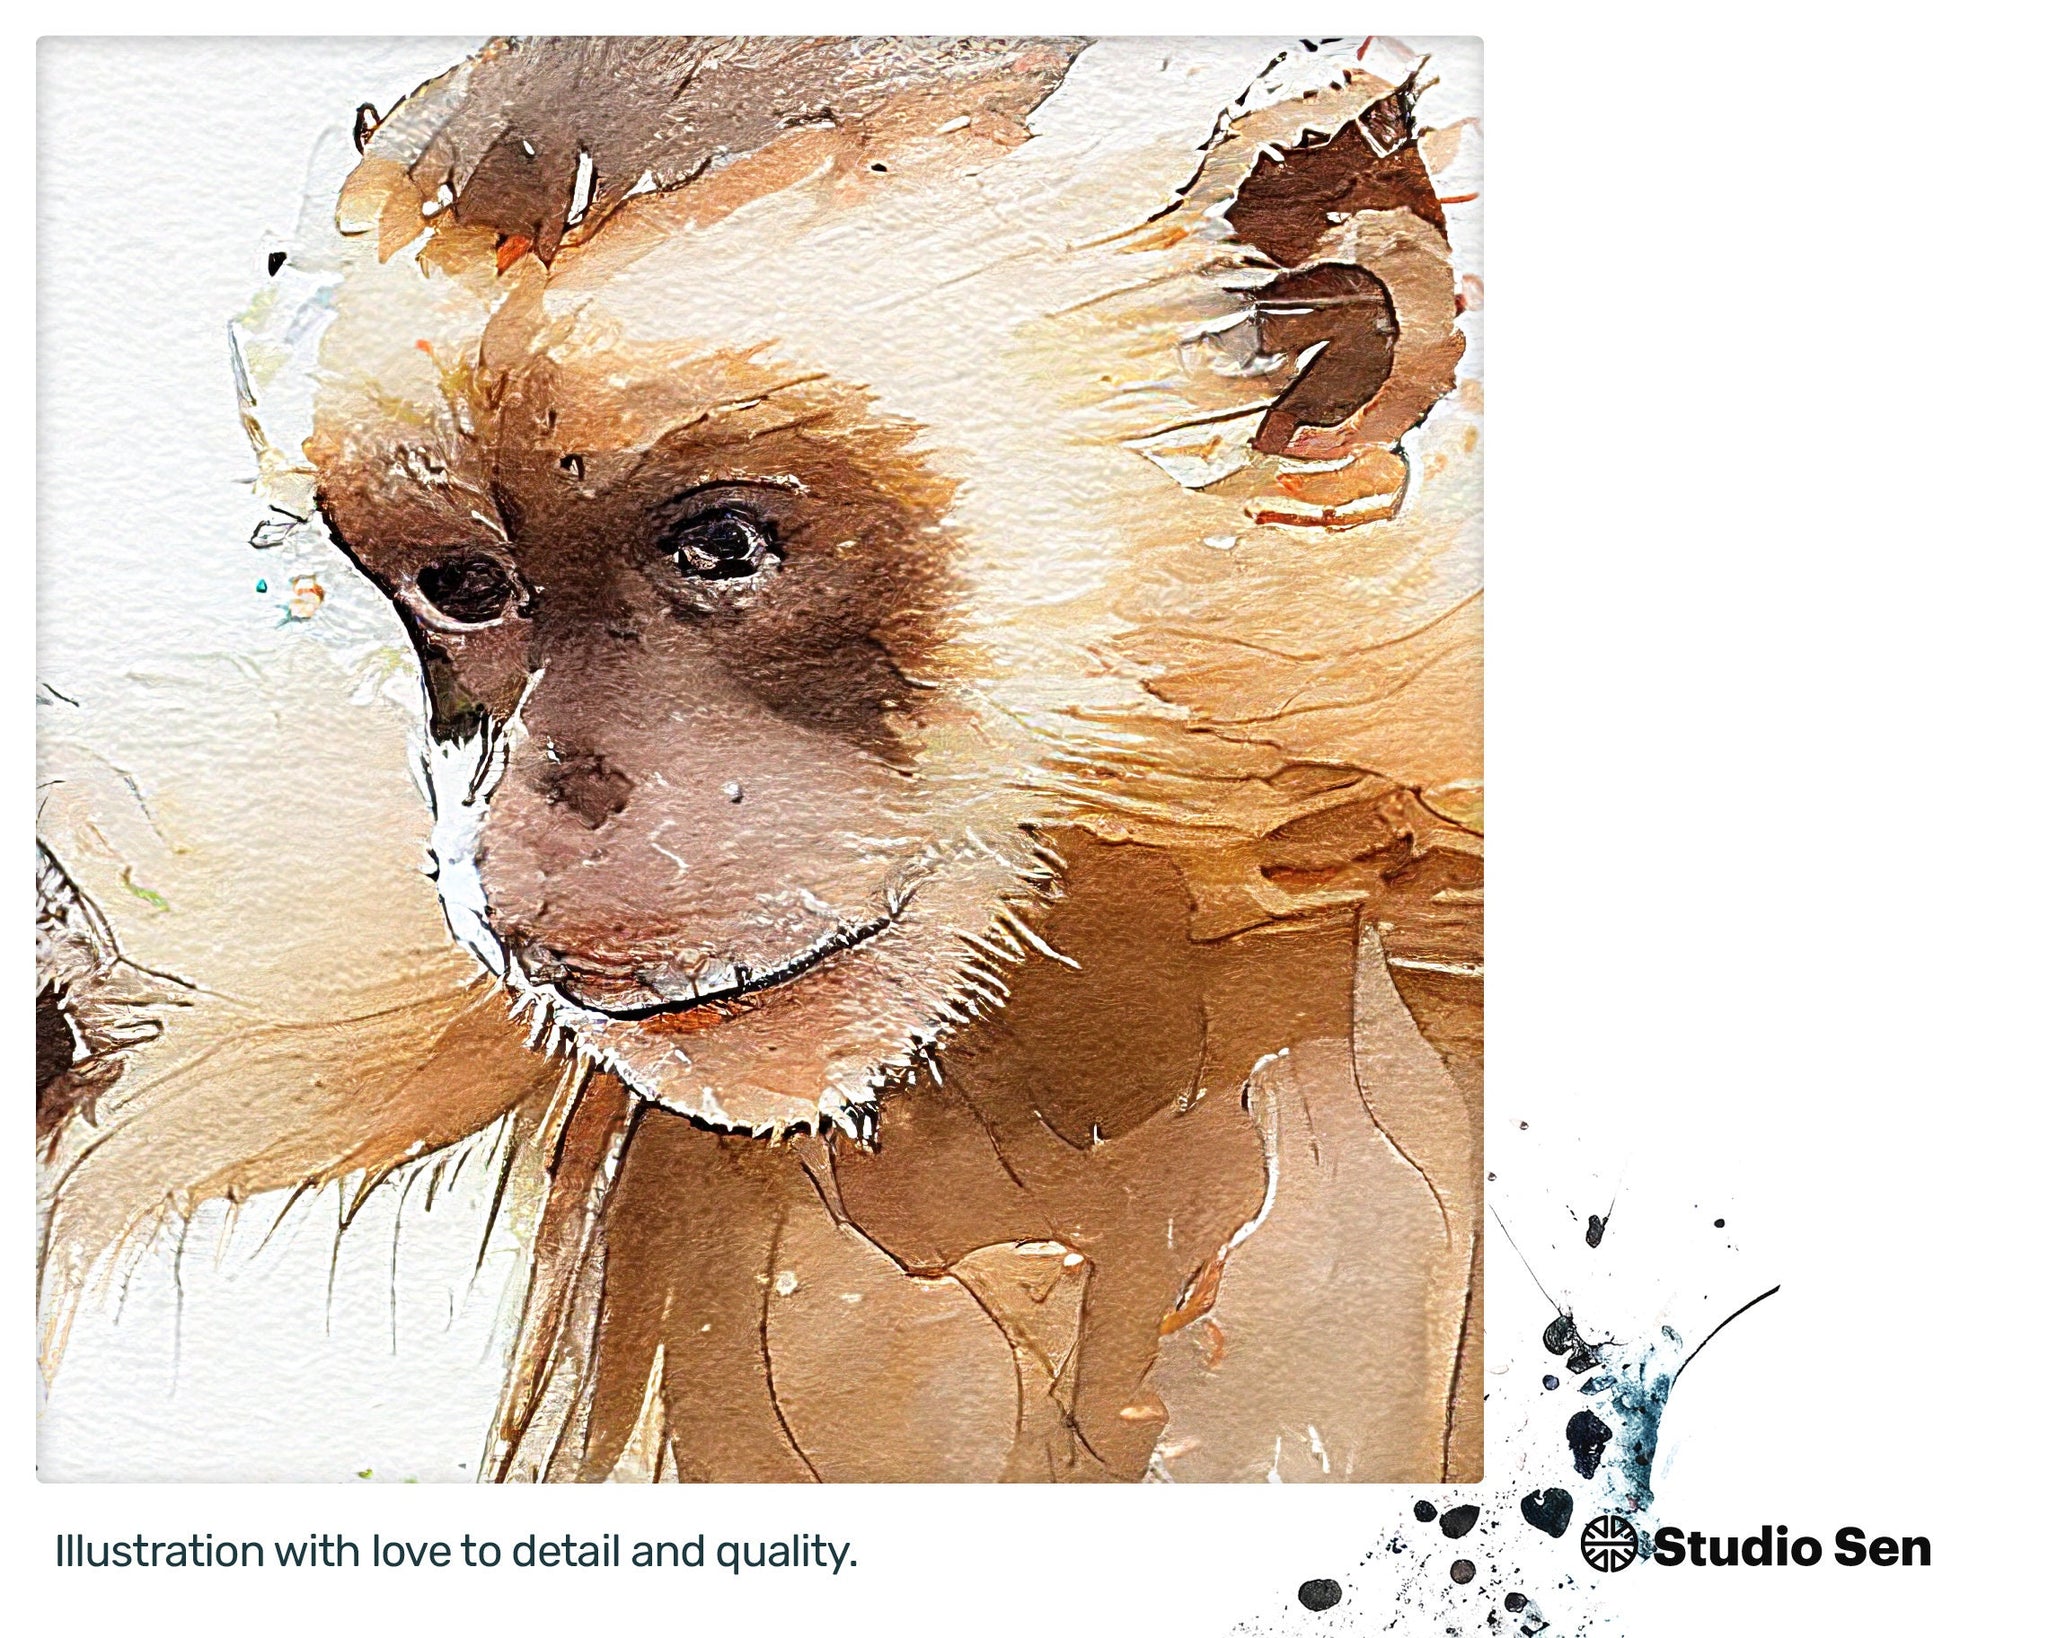 Capuchin Monkey style, Pet Artwork Digital Wall Art, Digital Download Print, drops and splashes